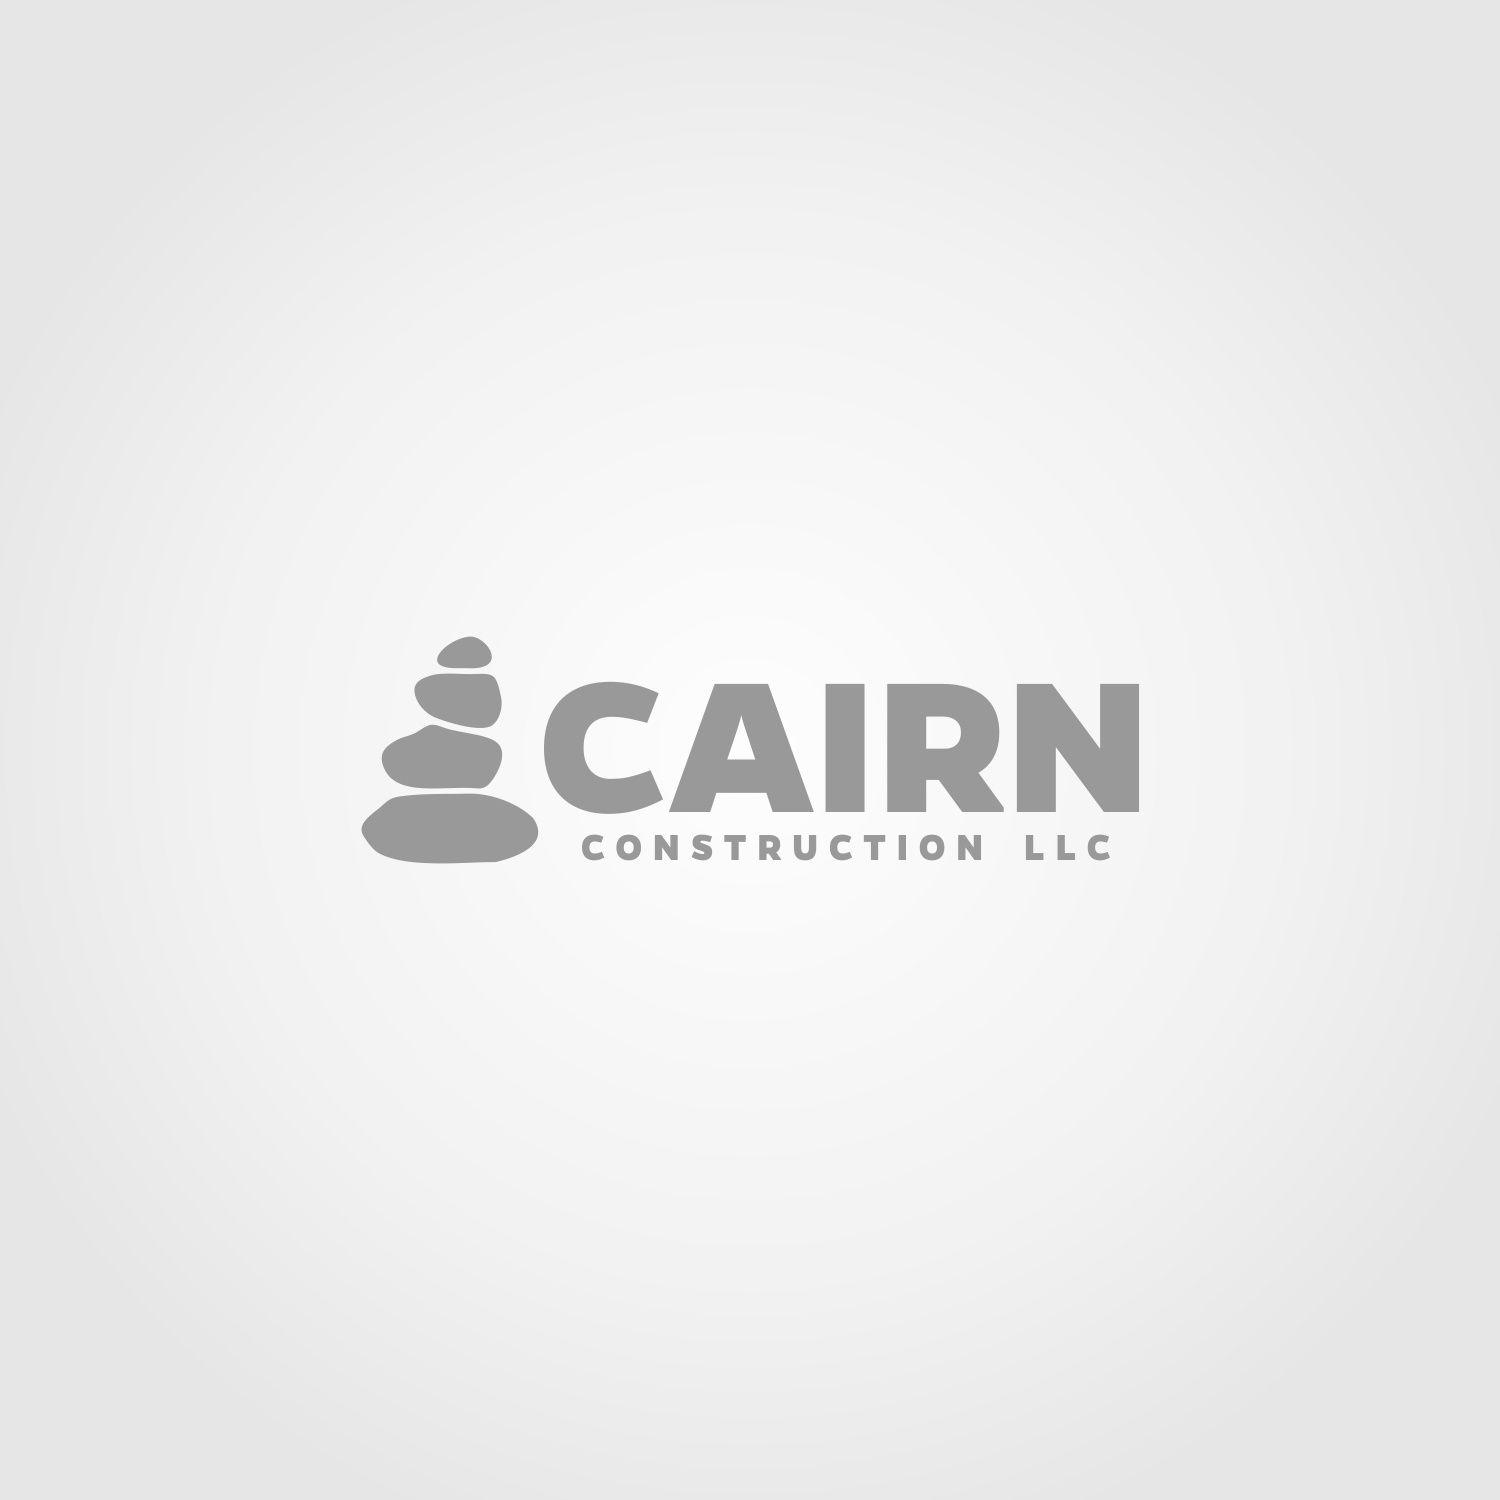 Cairn Logo - Bold, Personable Logo Design for Cairn Construction llc. by ArtLex ...